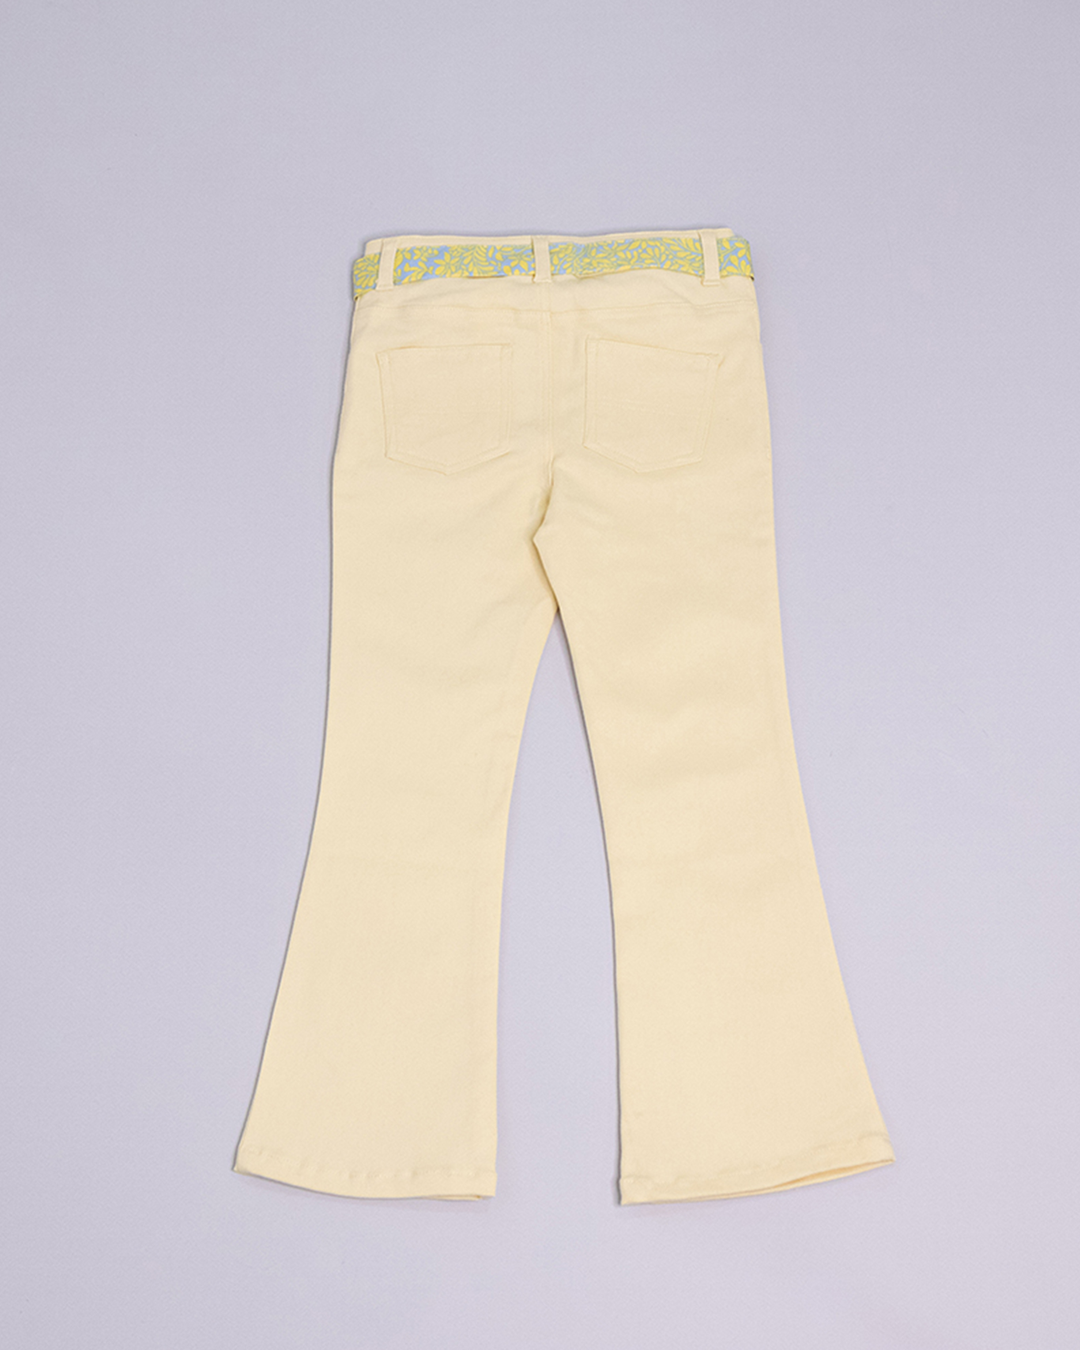 Pantalón bota ancha de color amarillo con cinturón estampado